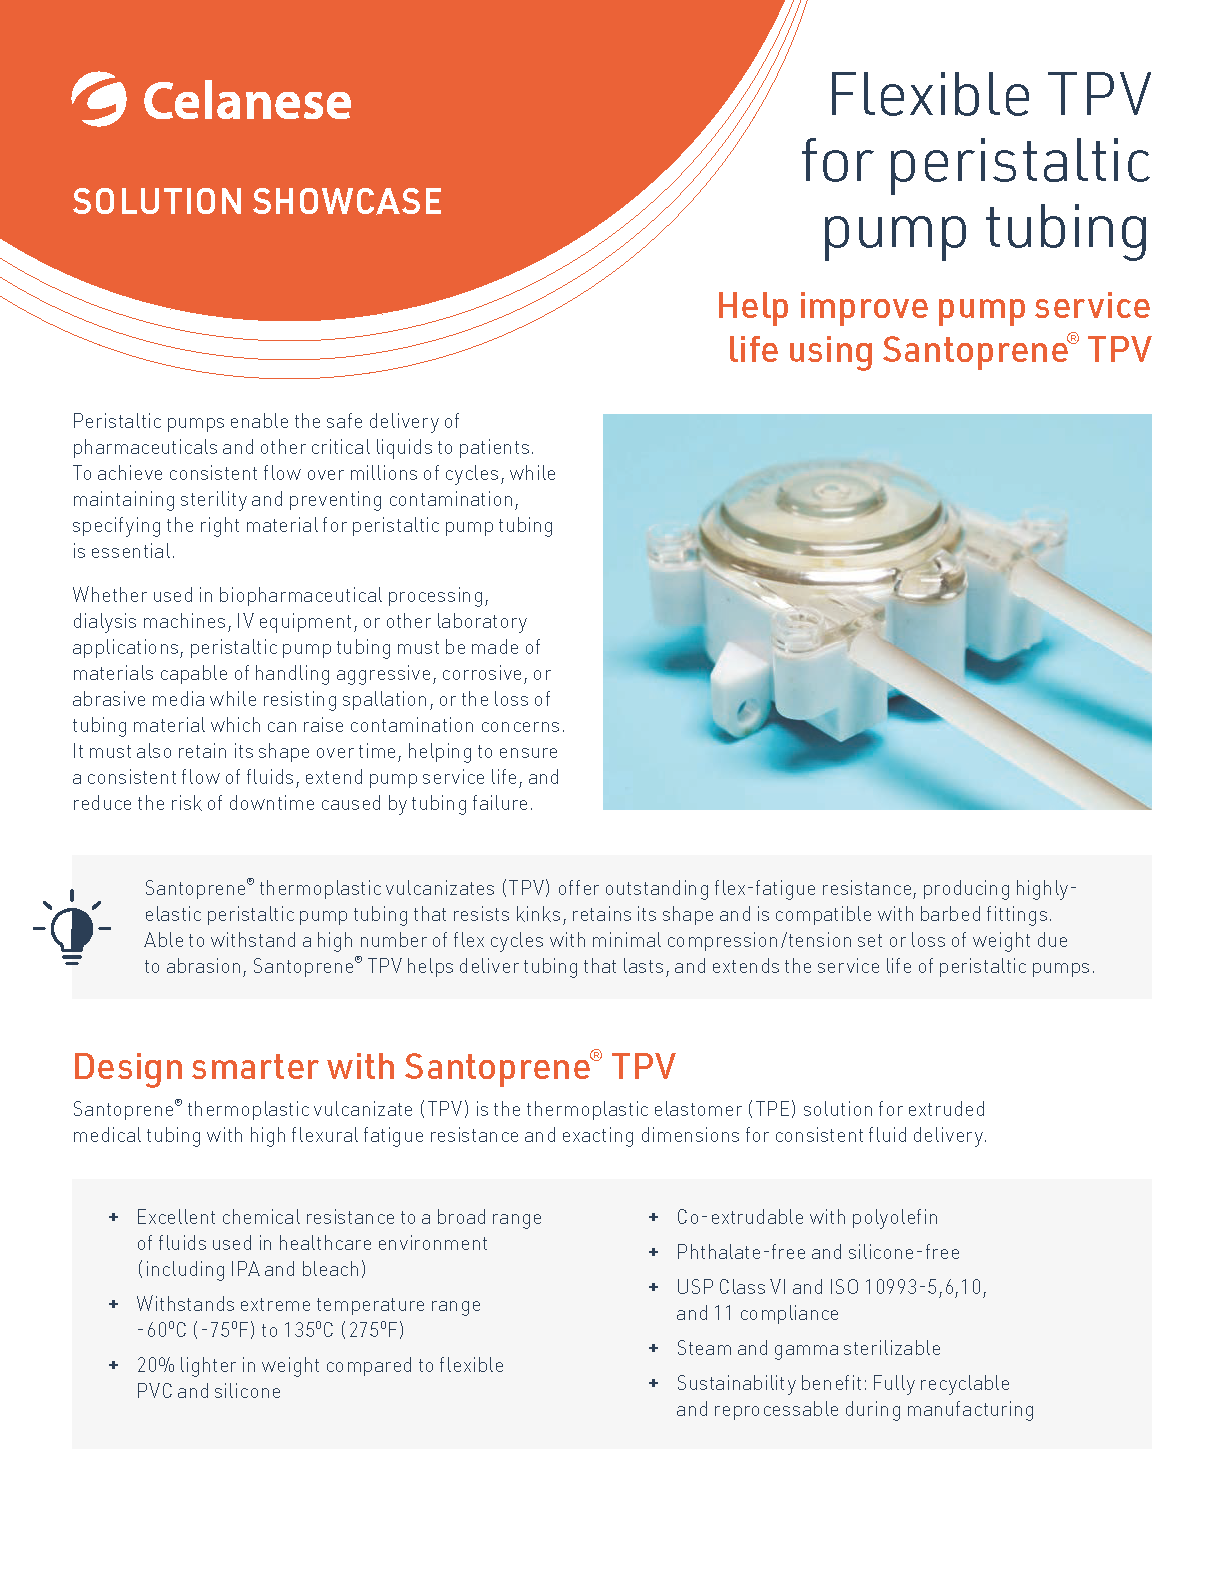 TPV - Santoprene TPV for Peristaltic Pump Tubing - Solution Showcase - (Image)